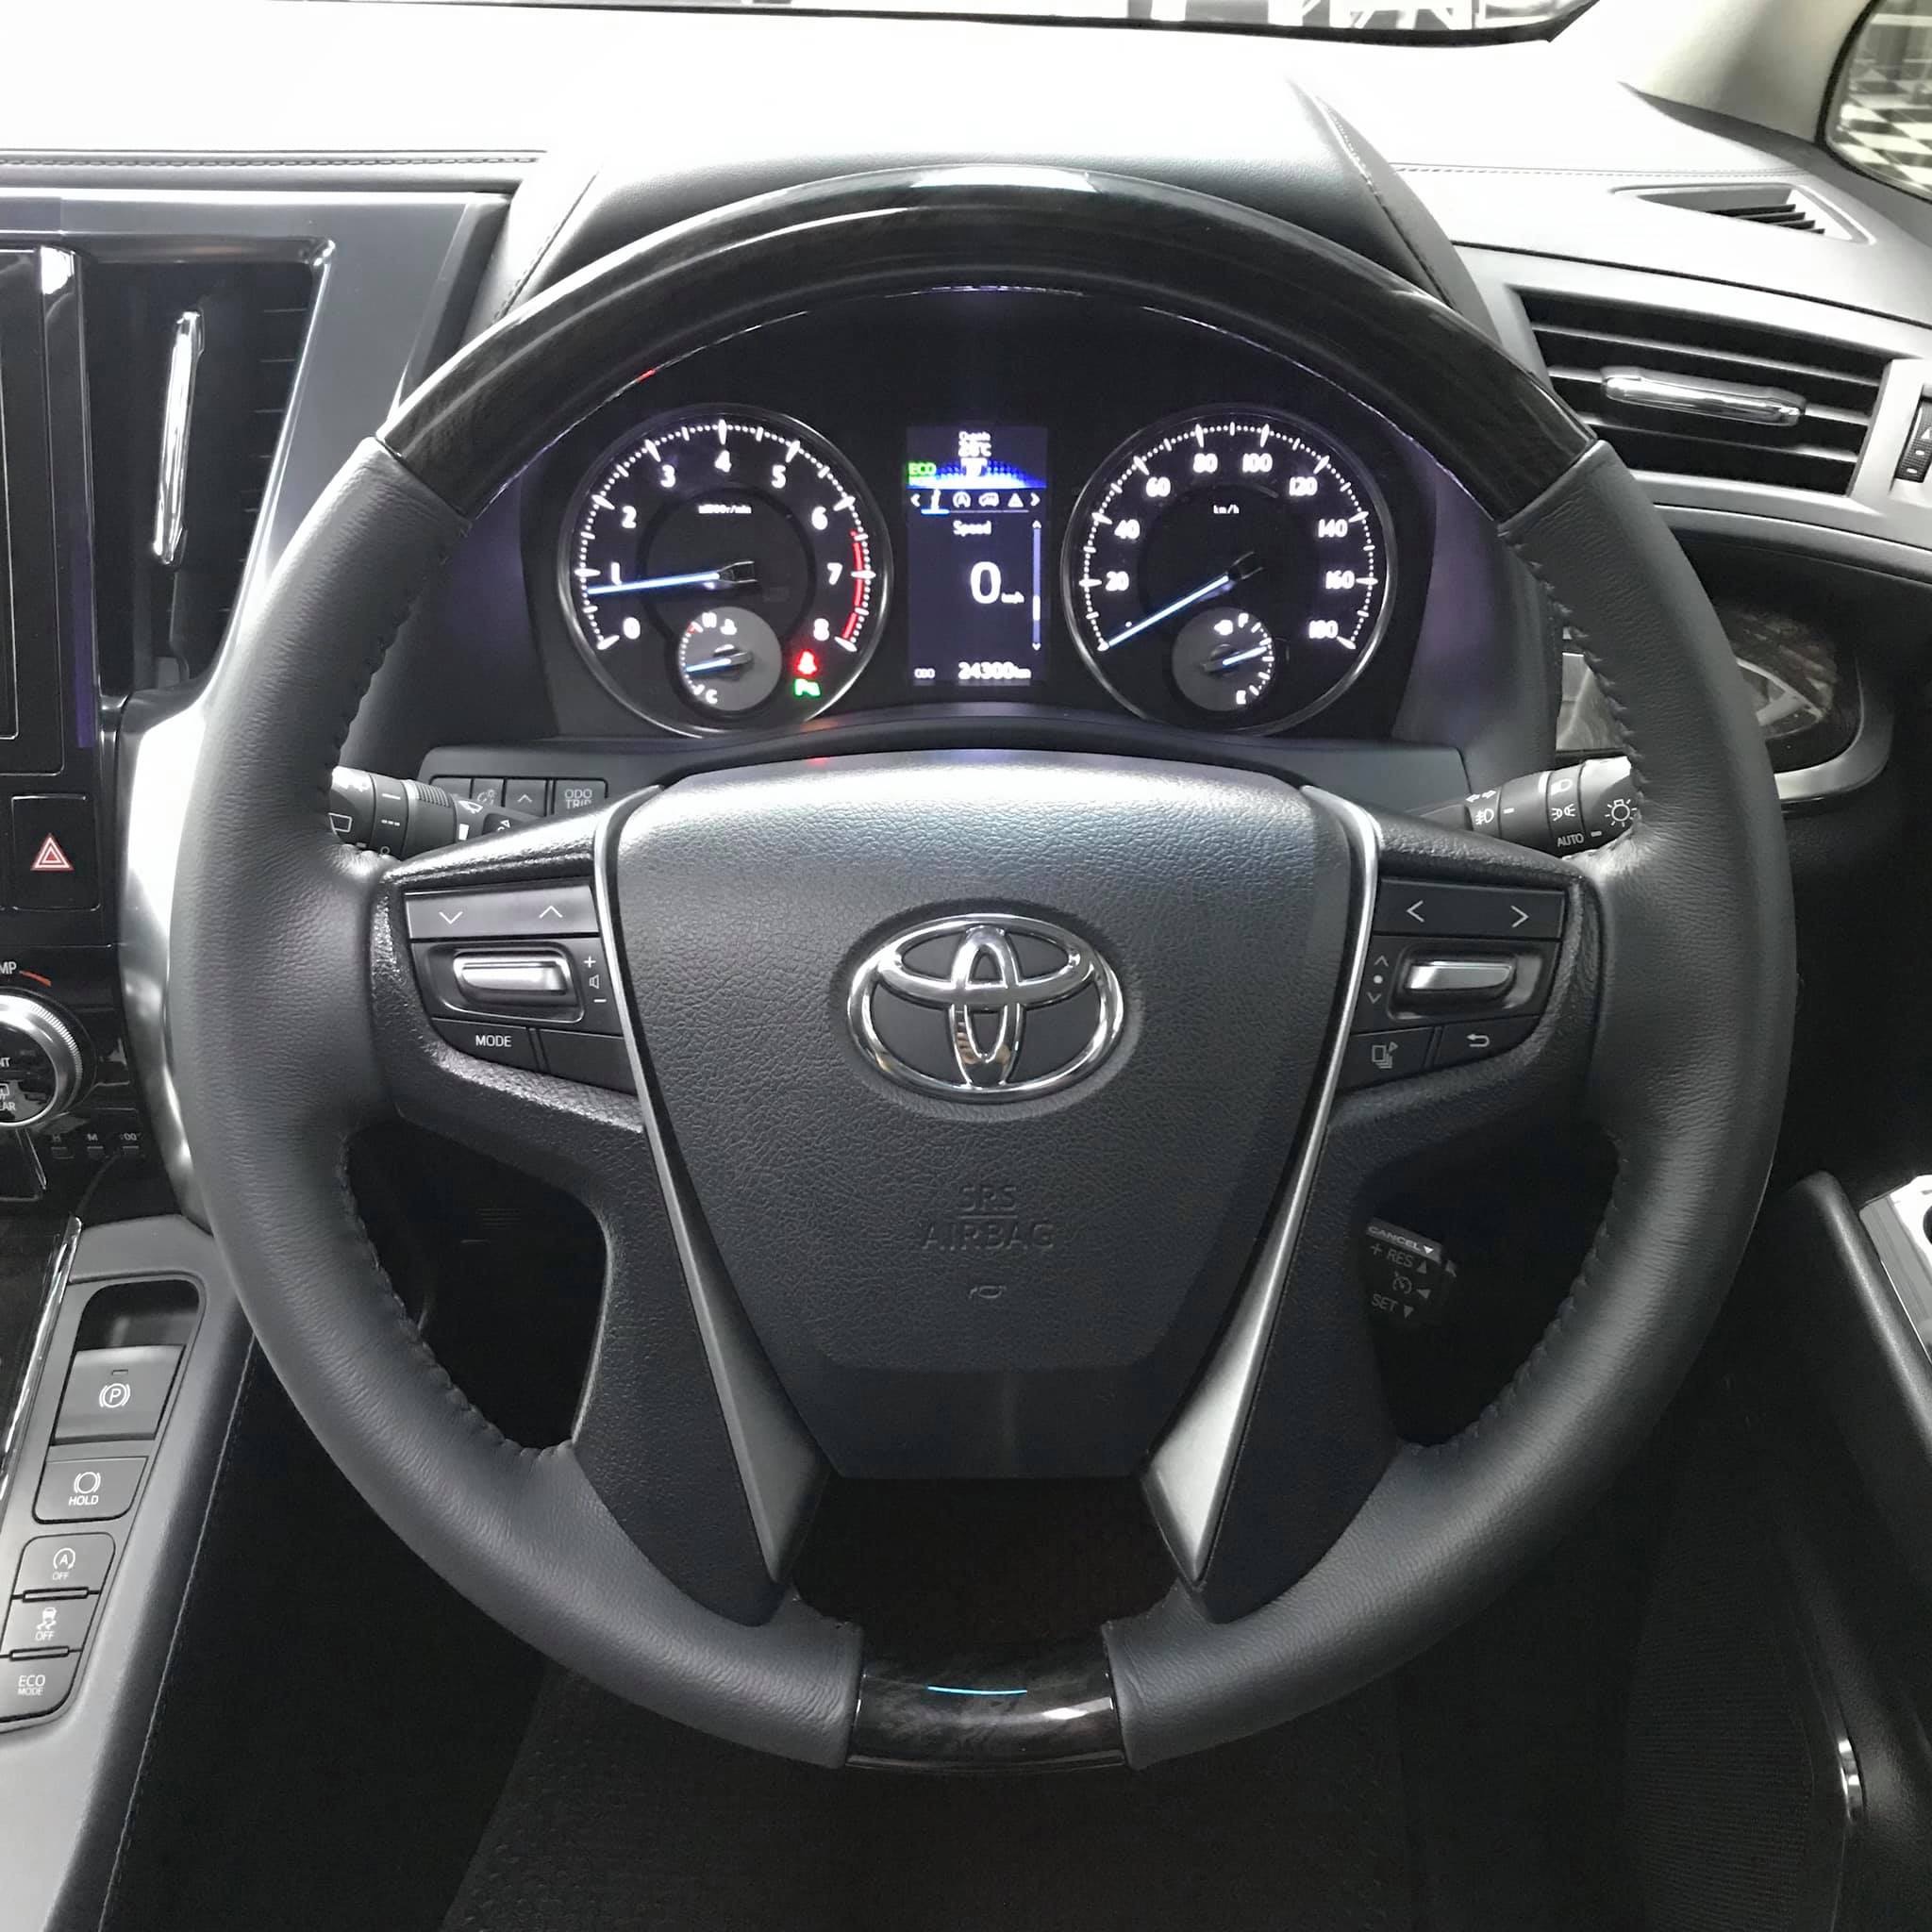 Toyota Vellfire ปี 2015 สีขาว